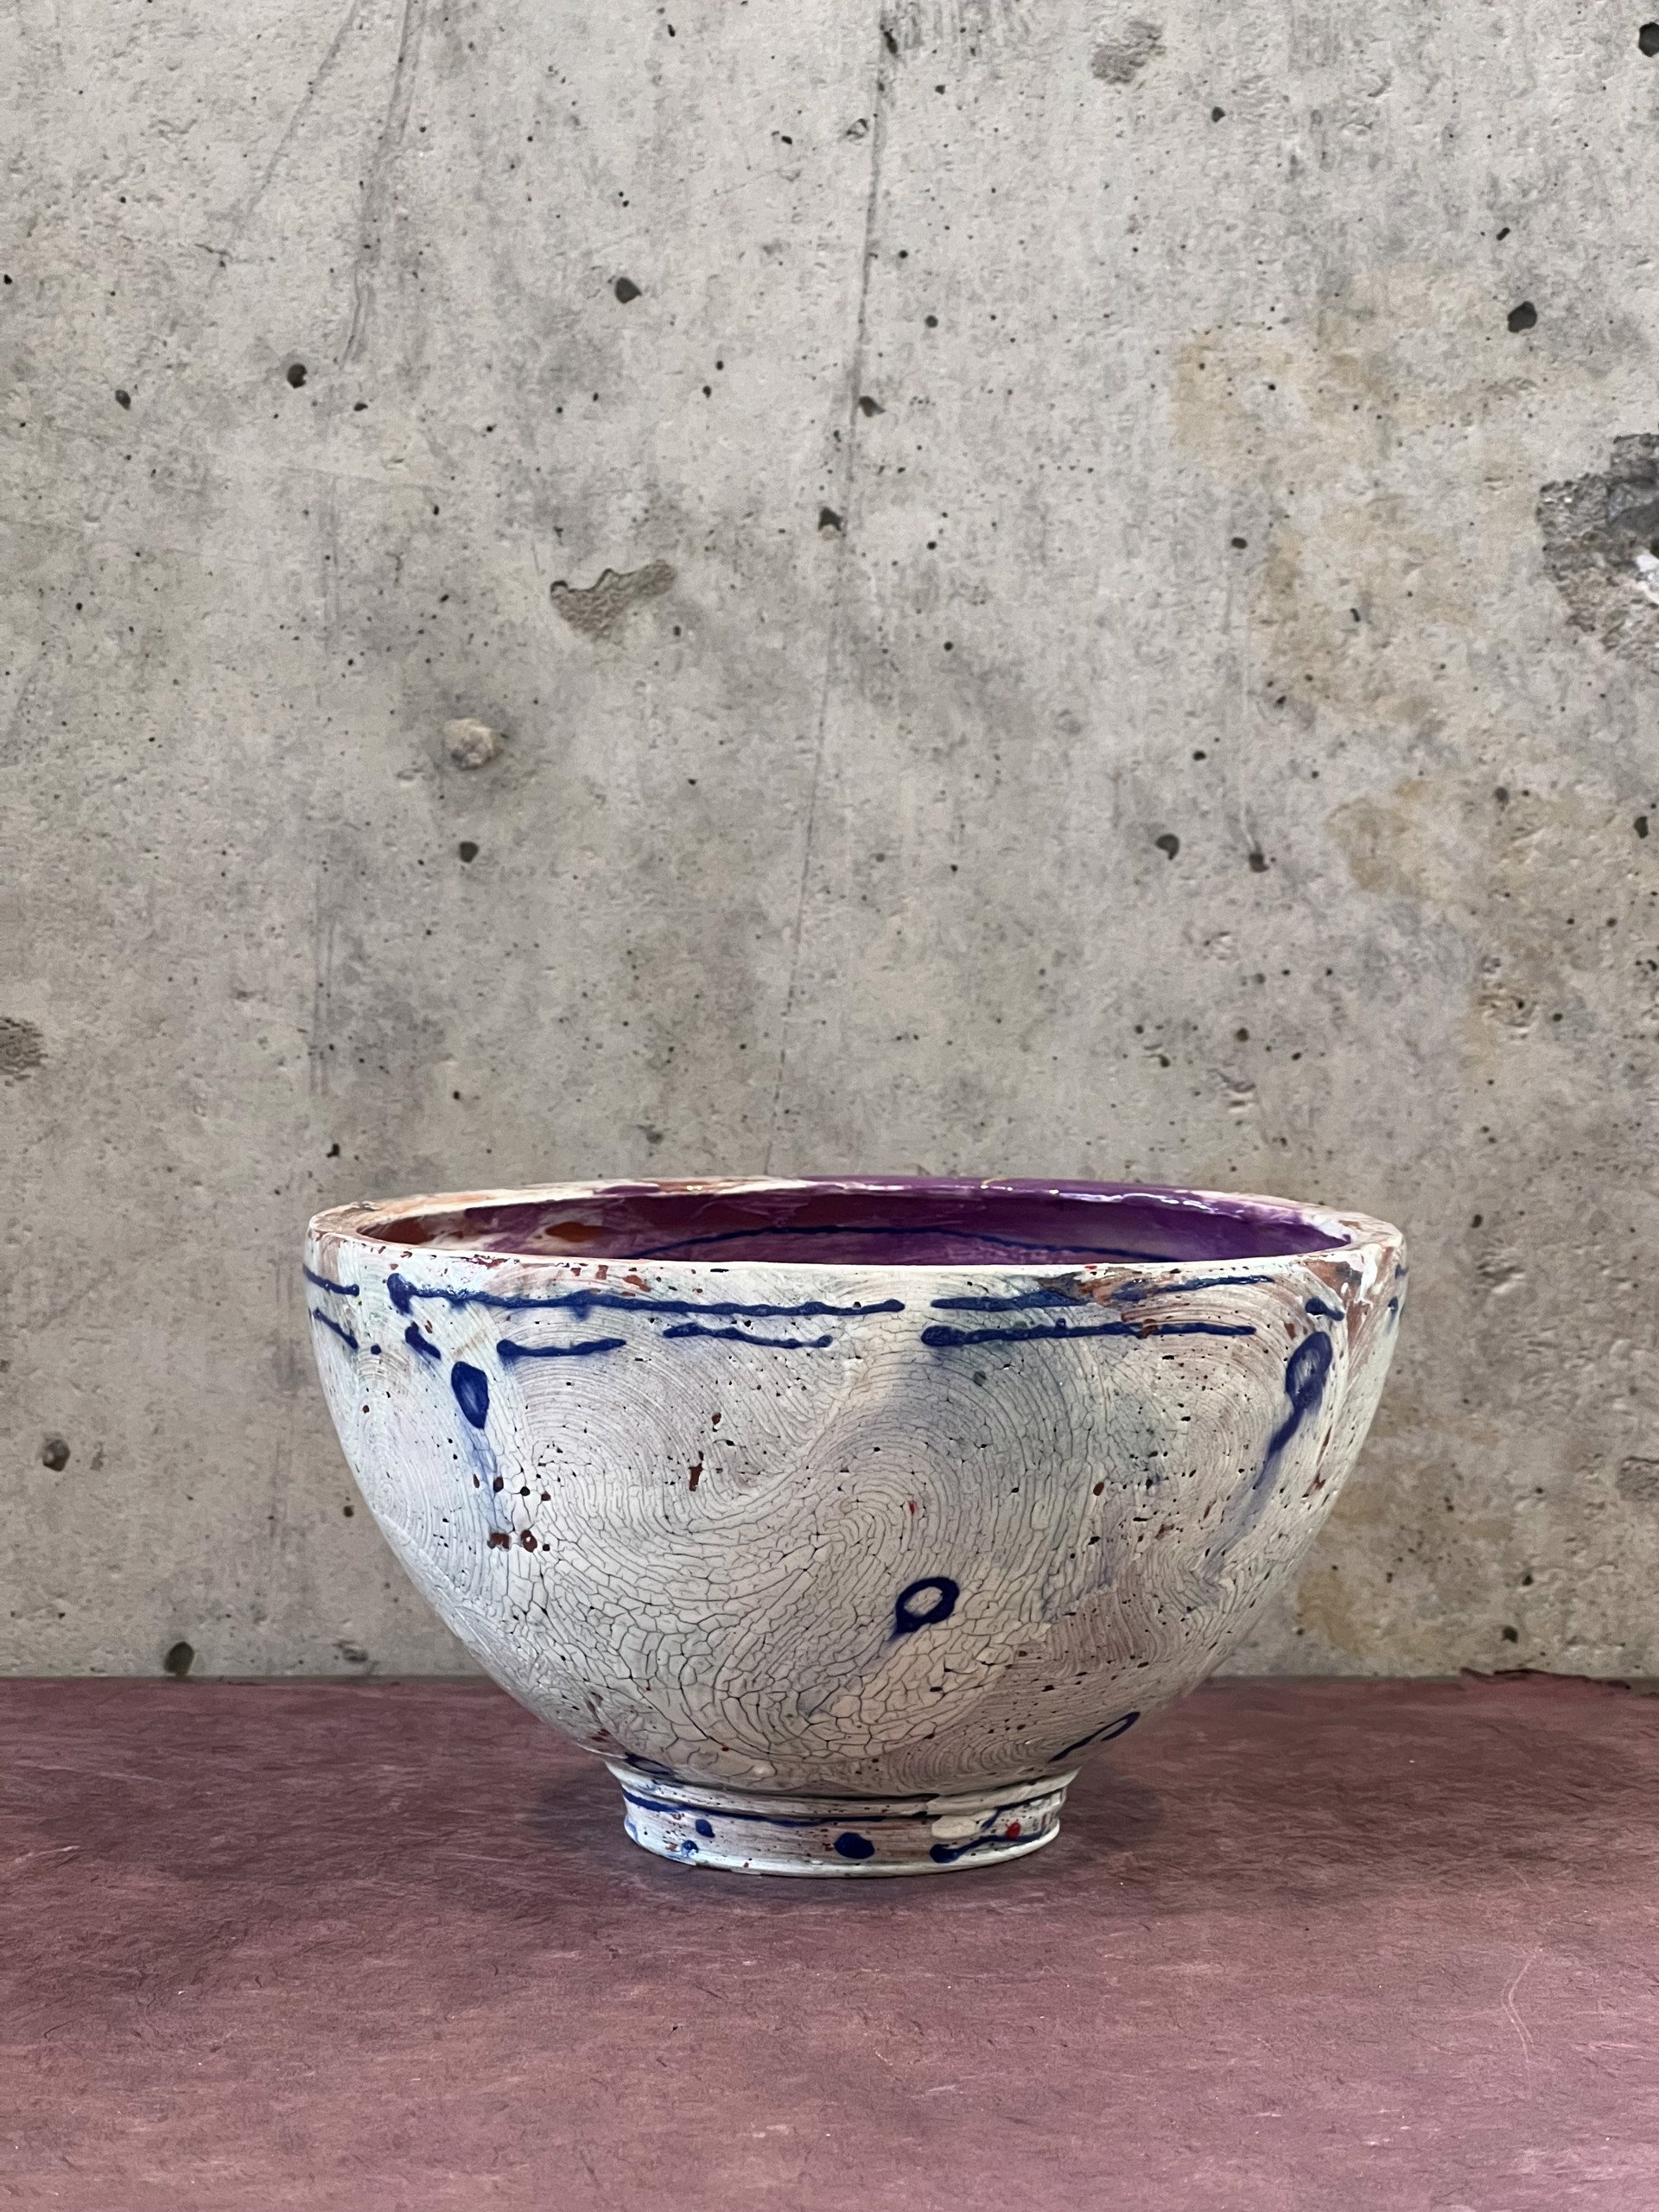 Small Bowl No. 2 by Susan McGilvrey